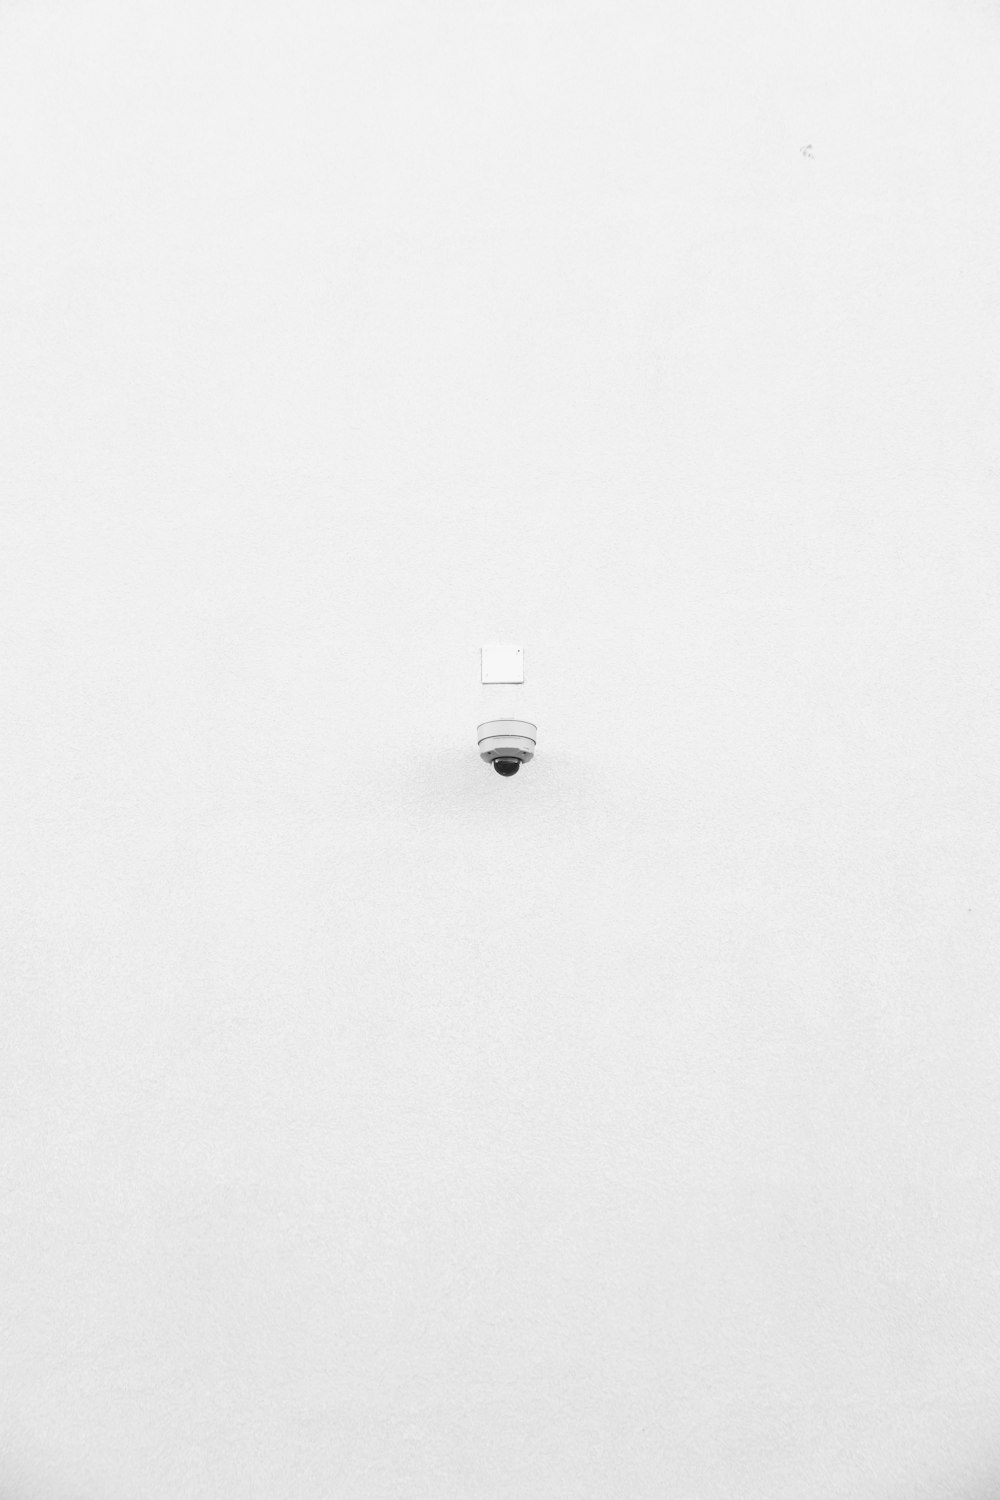 white round device on white surface